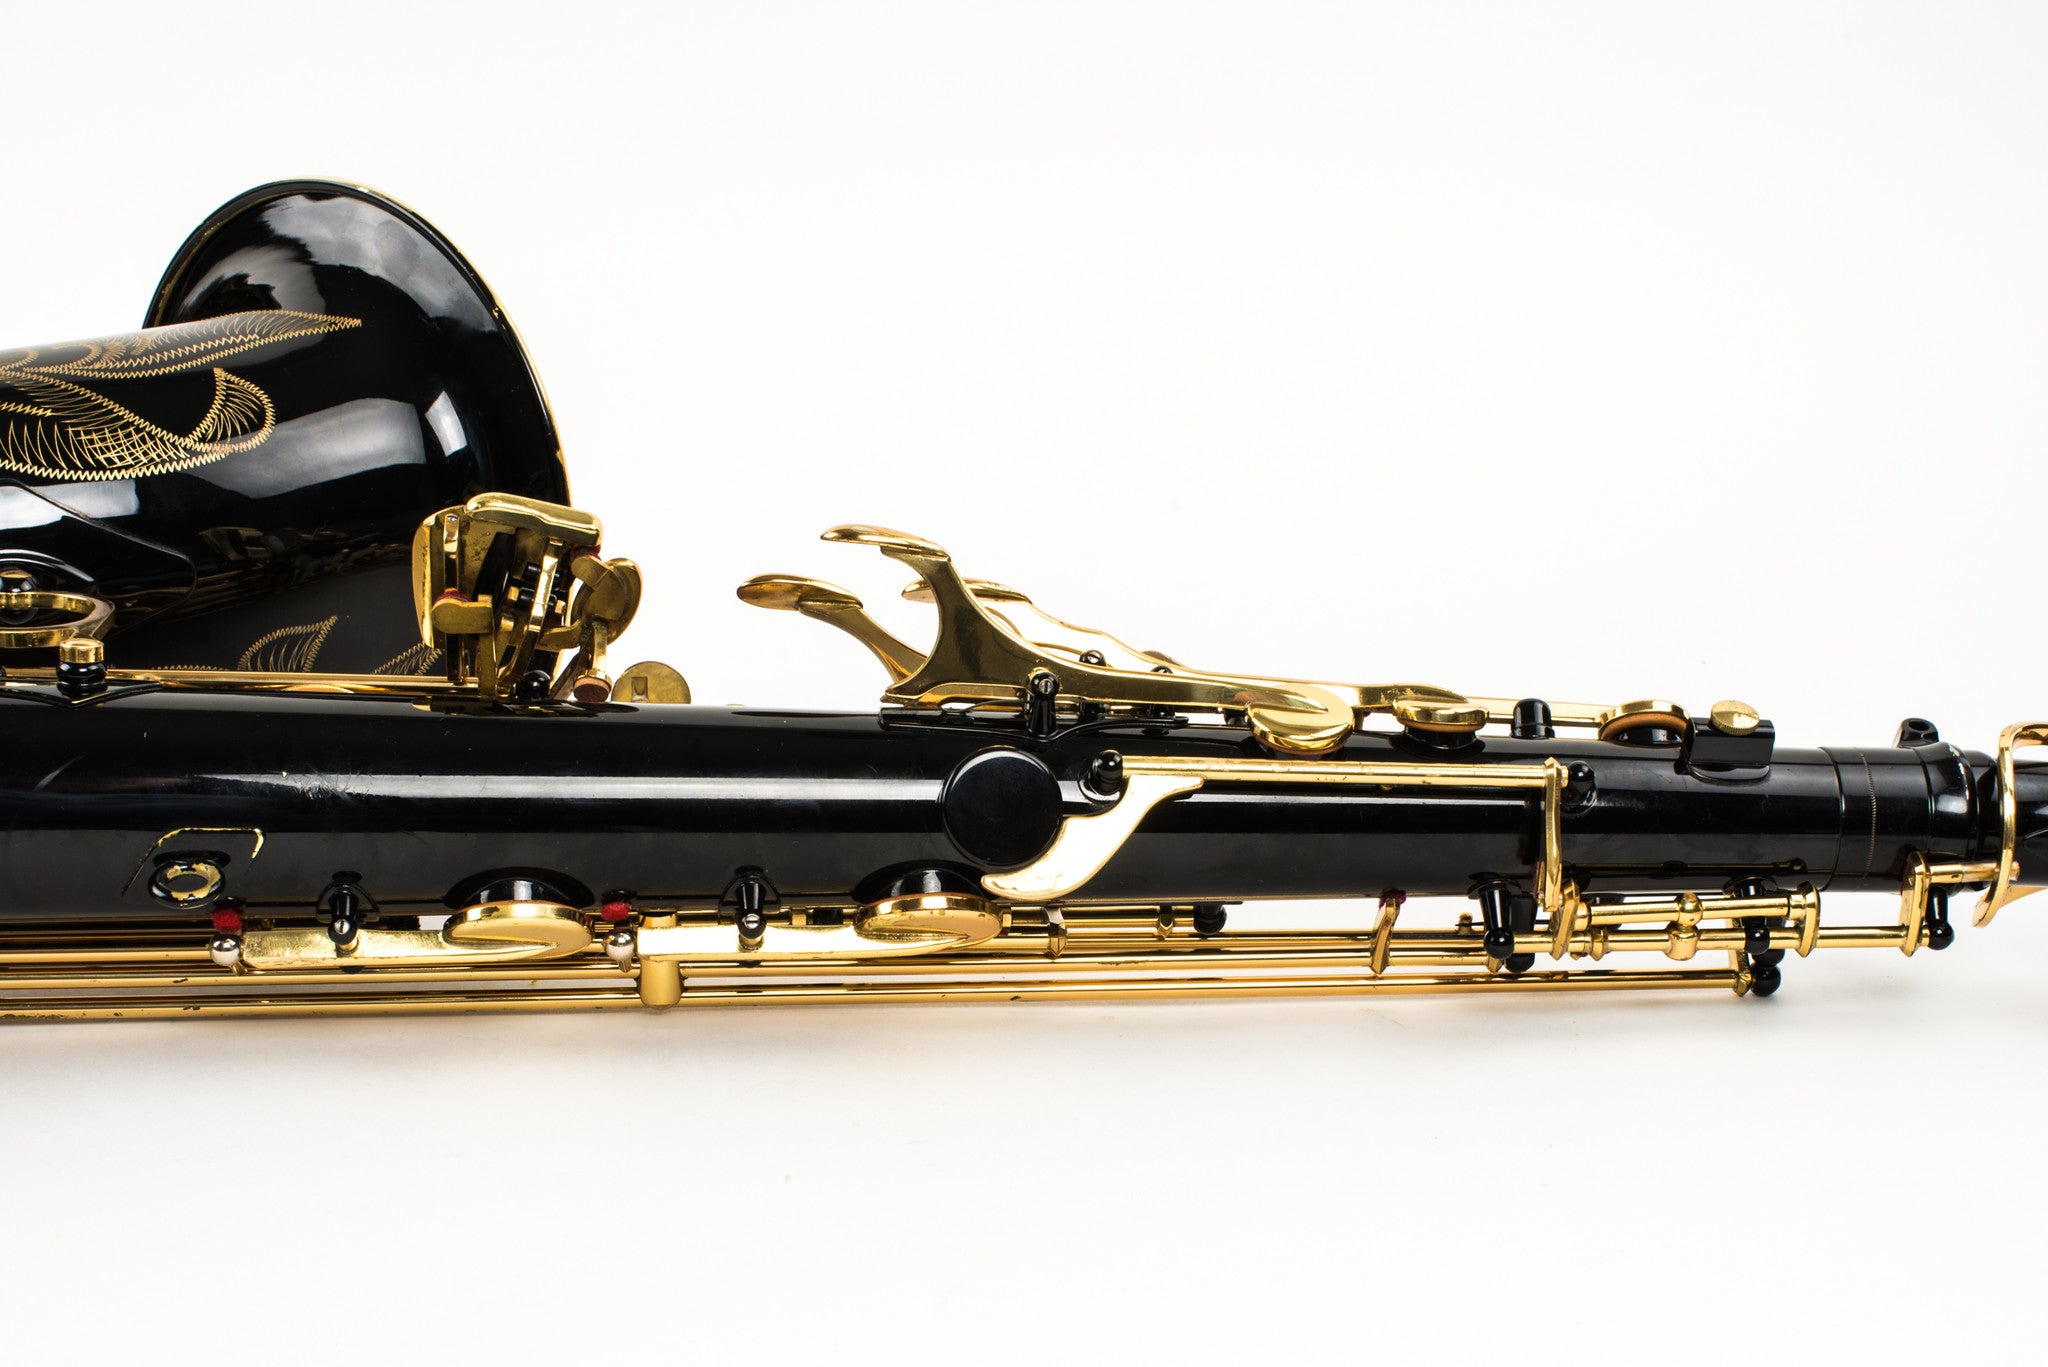 Yamaha Custom 875 Black Lacquer Tenor Saxophone